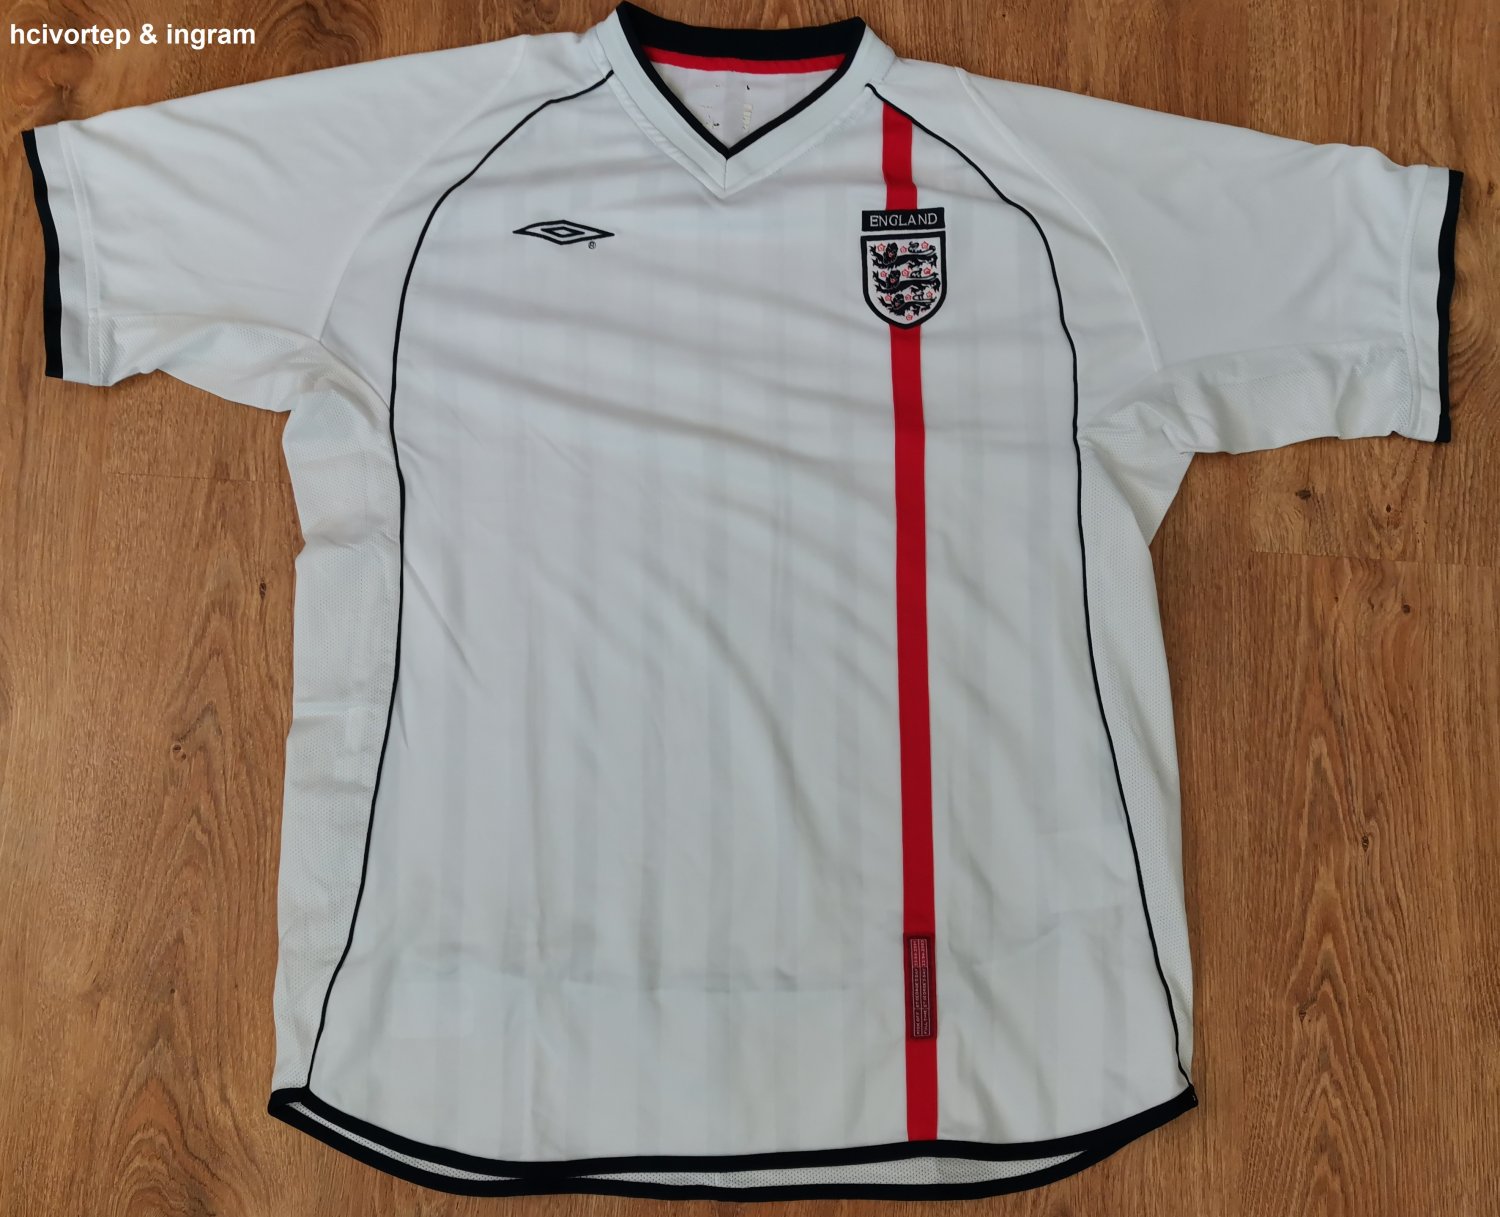 England Home football shirt 2001 - 2003.